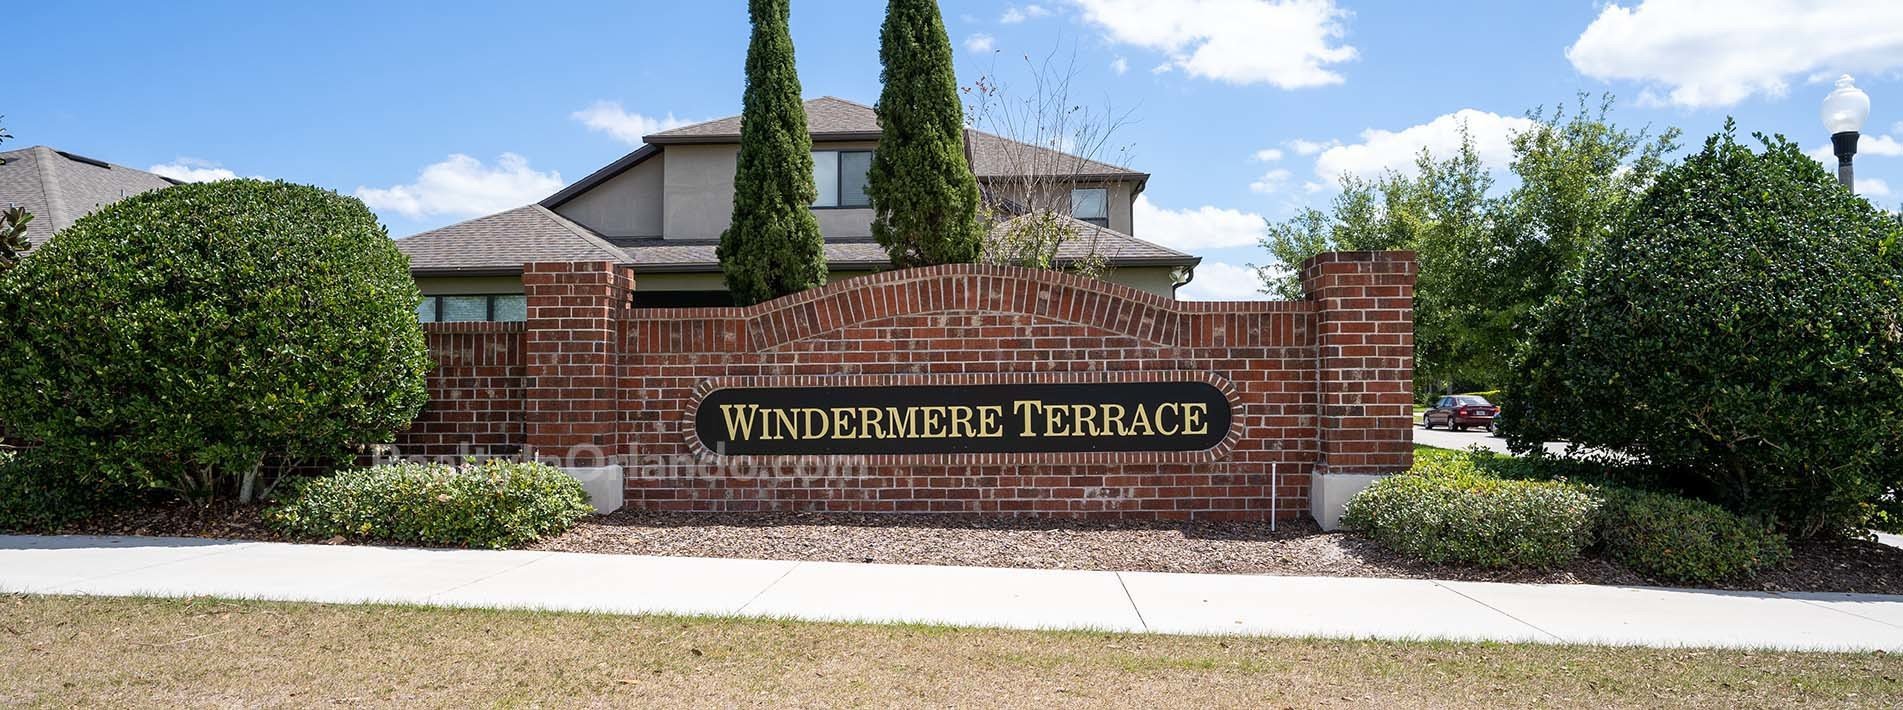 Windermere Terrace Real Estate